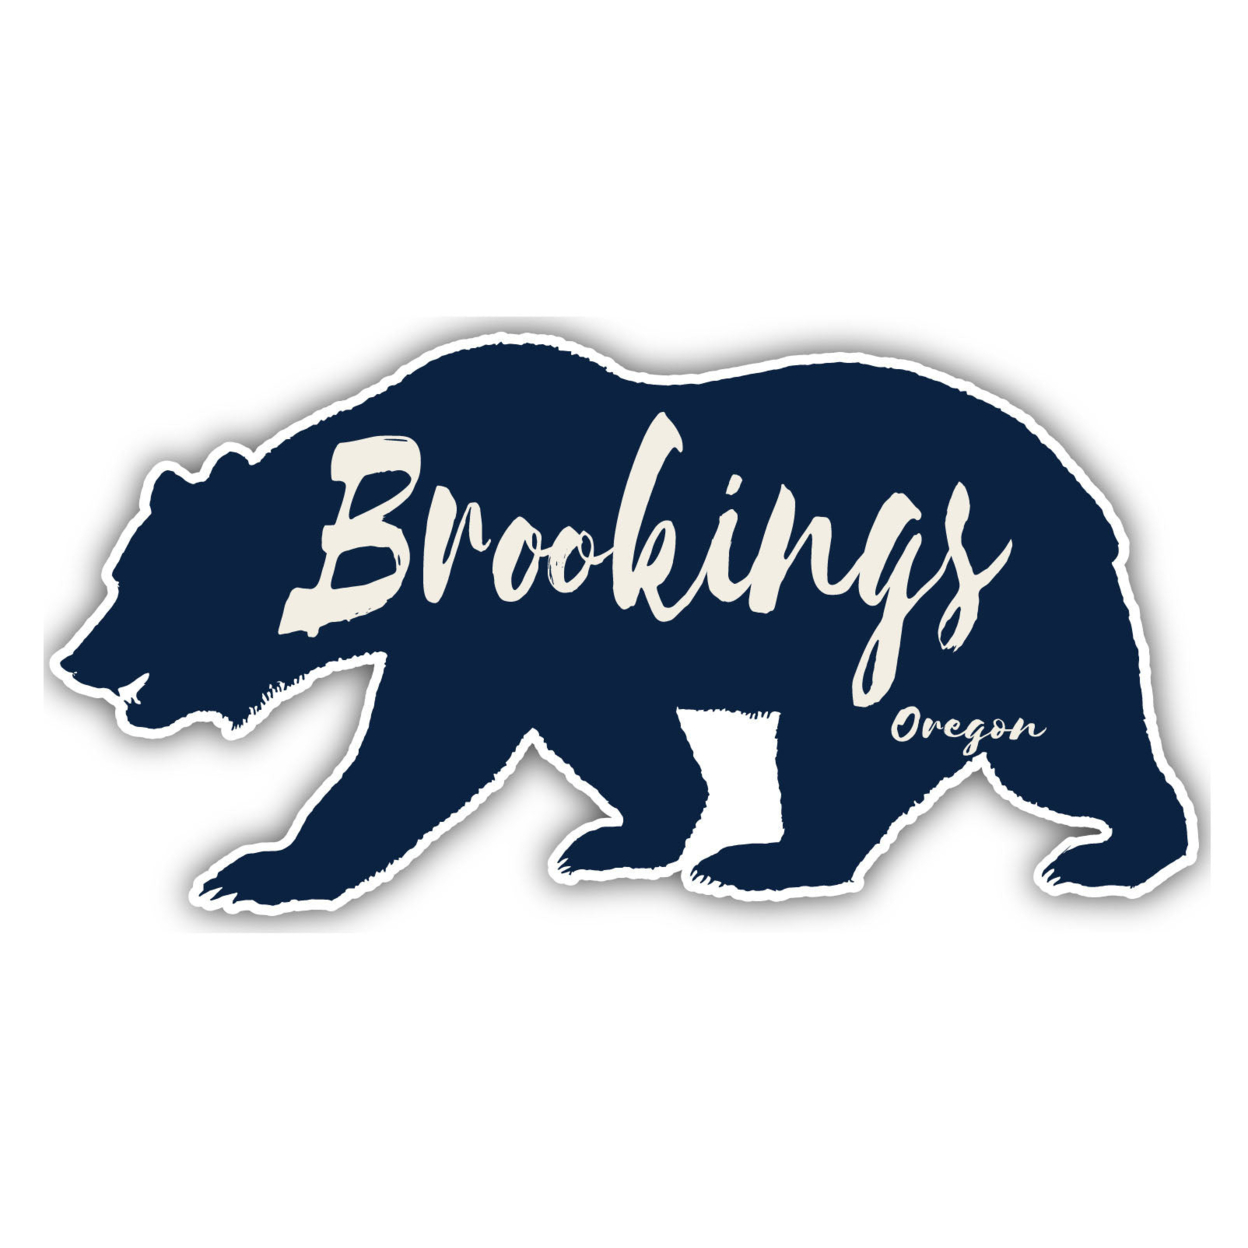 Brookings Oregon Souvenir Decorative Stickers (Choose Theme And Size) - Single Unit, 6-Inch, Bear